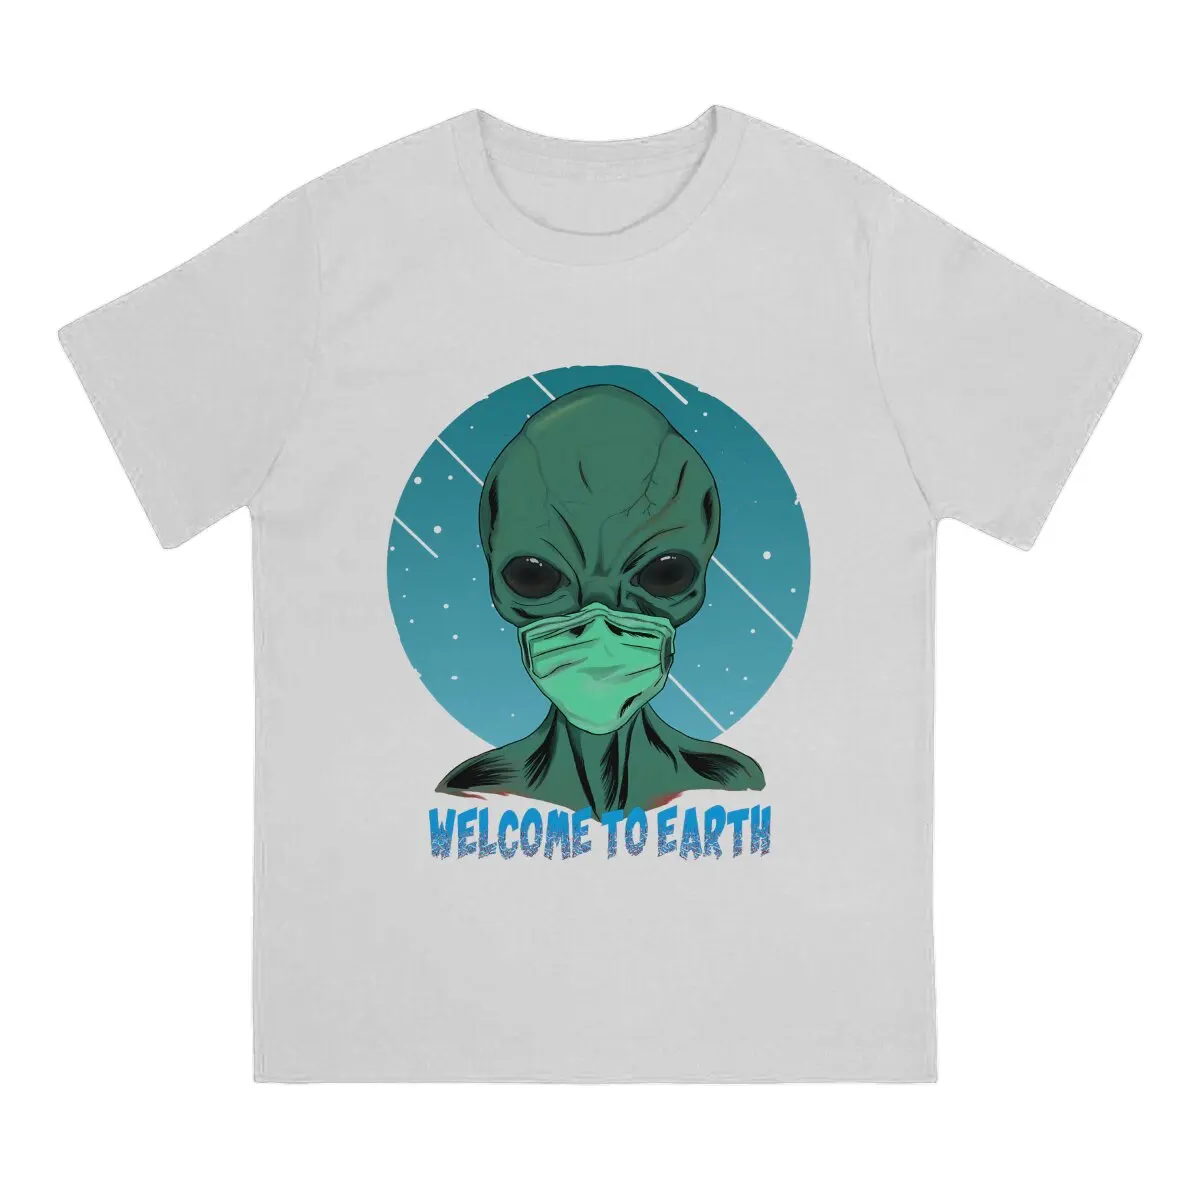 Alien Poliéster Camiseta para os Homens de boas-Vindas Para a Terra Macia Casual, Camisolas, T-Shirt Novidade